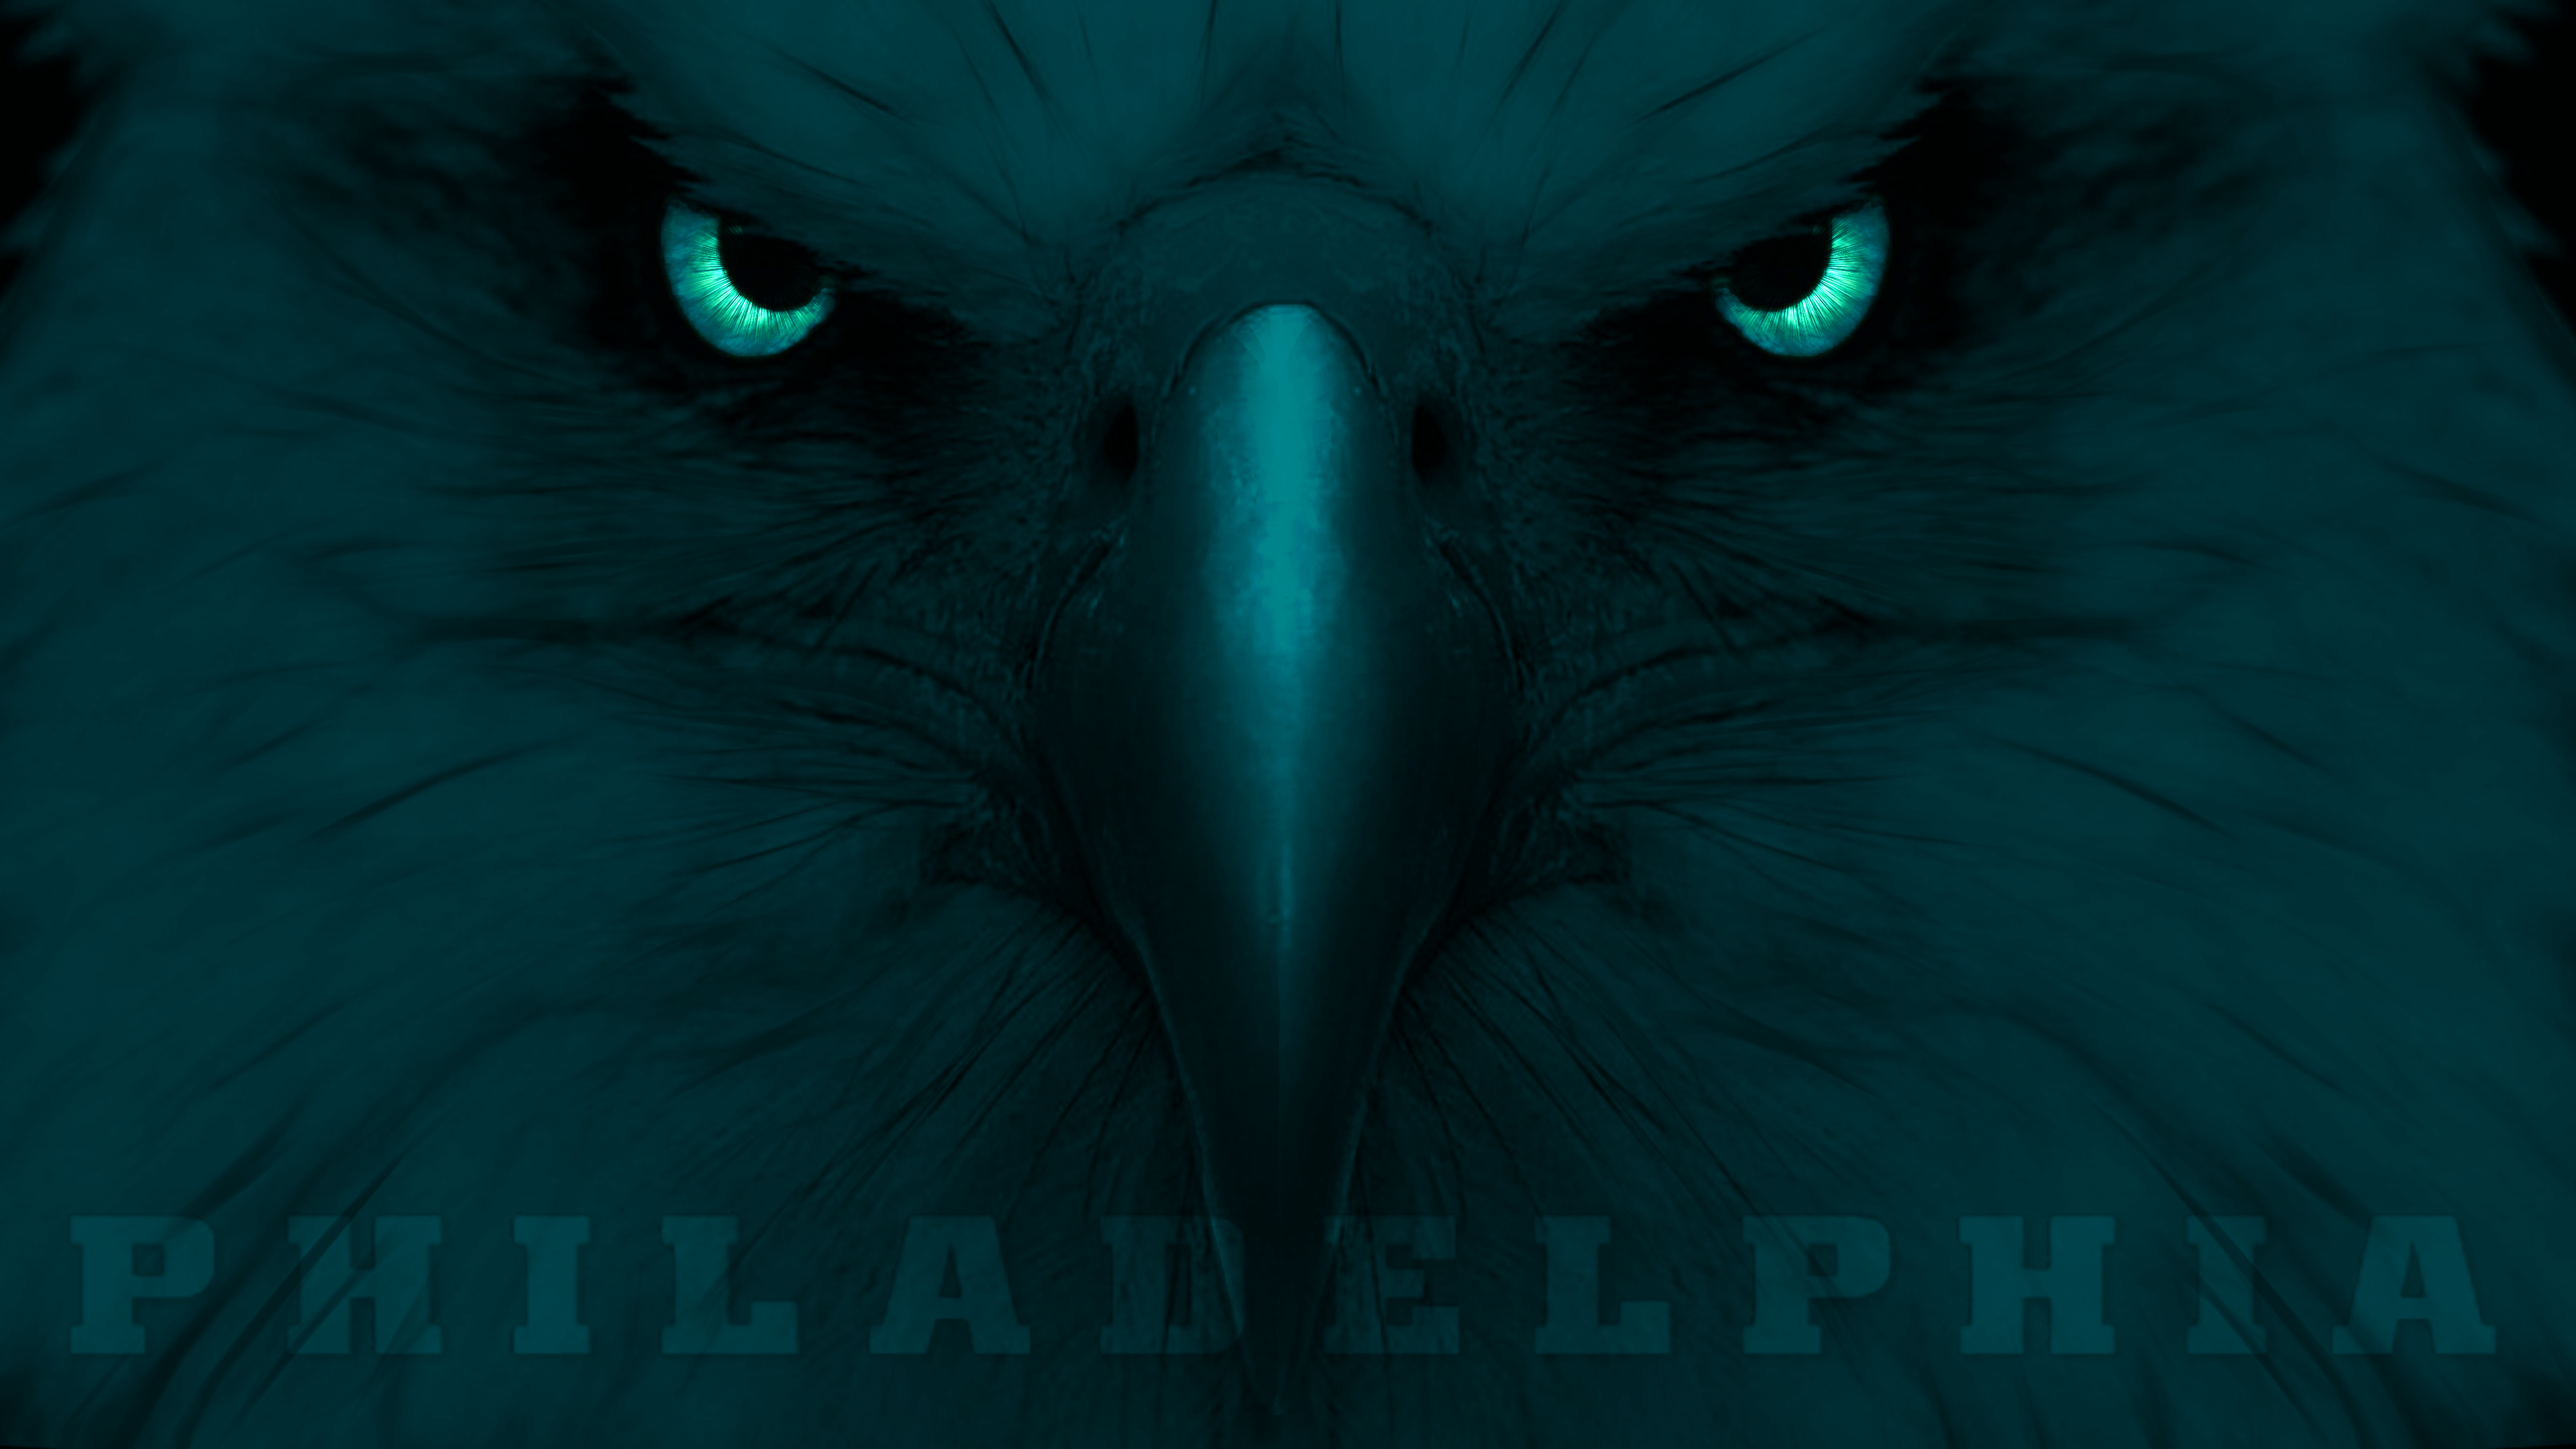 Philadelphia Eagles Wallpapers - Top Free Philadelphia Eagles